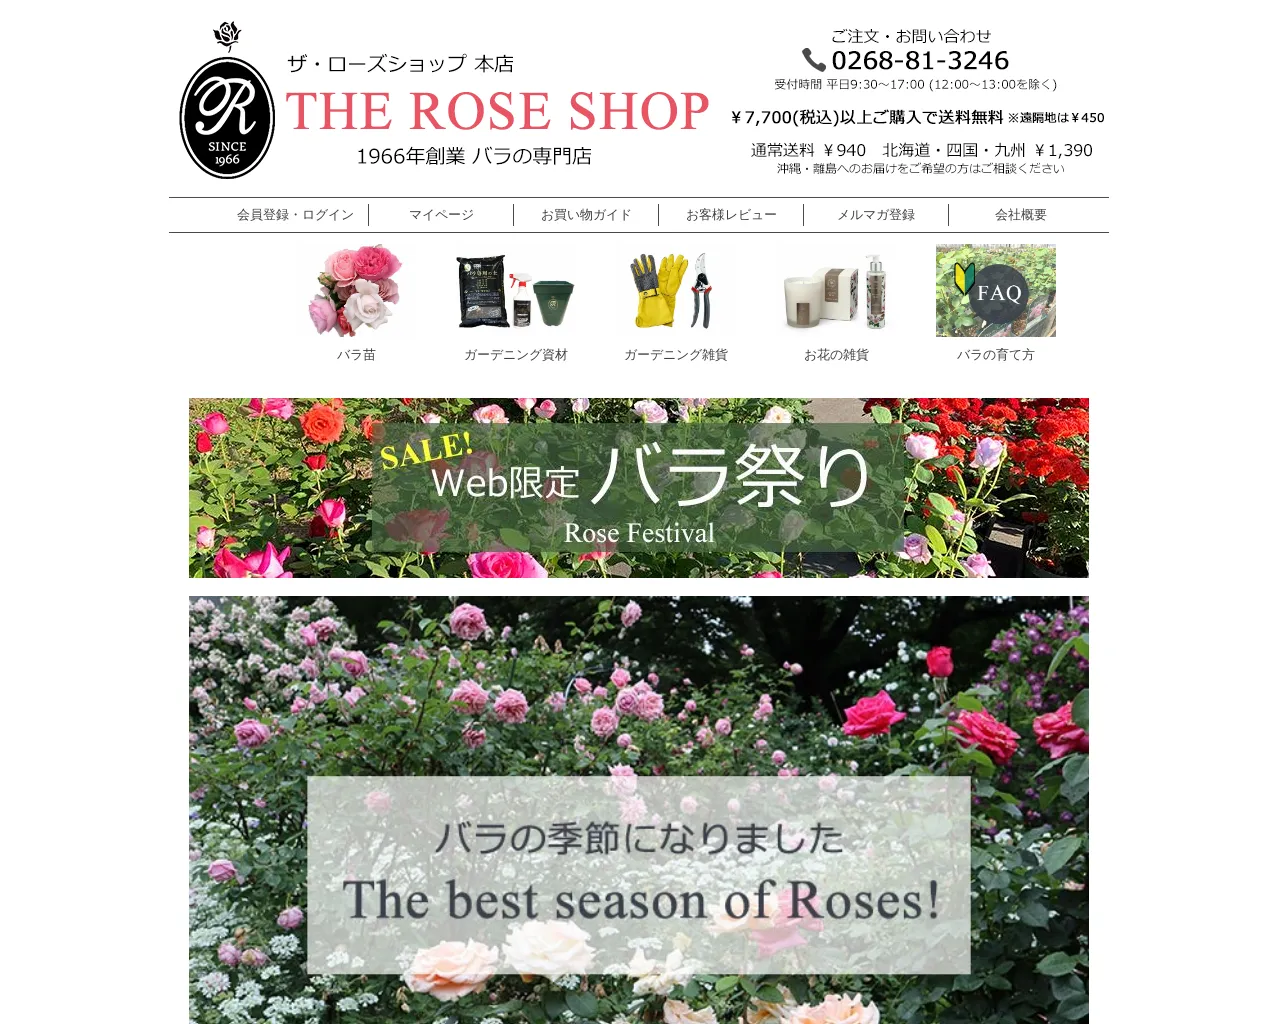 THE ROSE SHOP [ザローズショップ] site